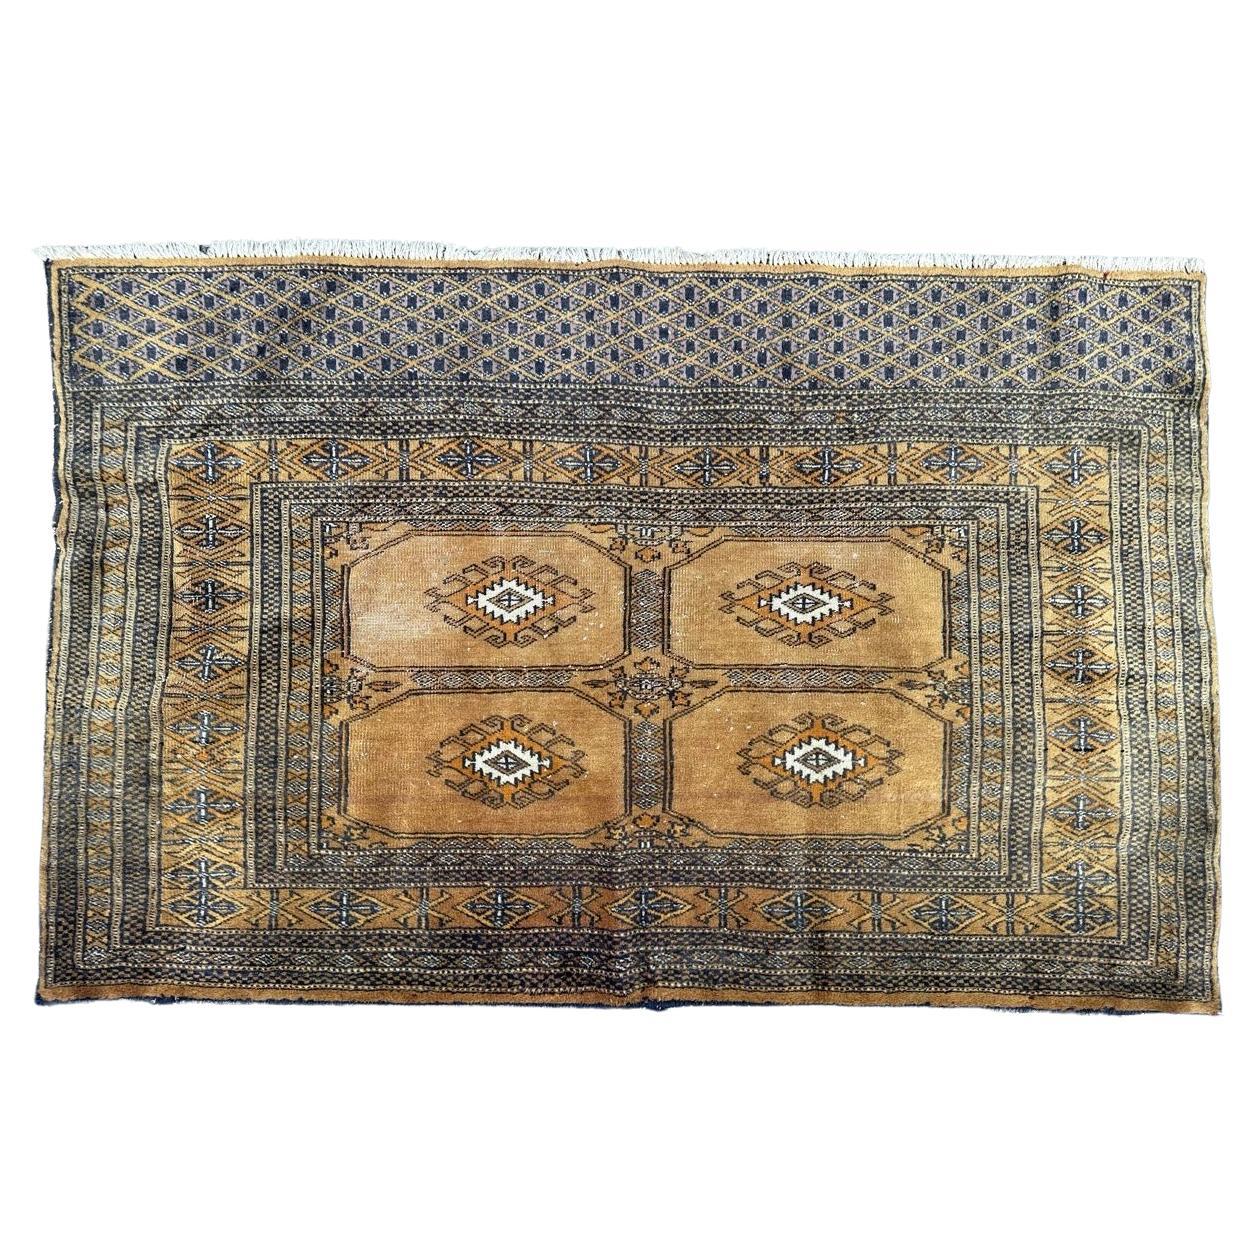 Le joli tapis vintage pakistanais chuval de style turkmène de Bobyrug 